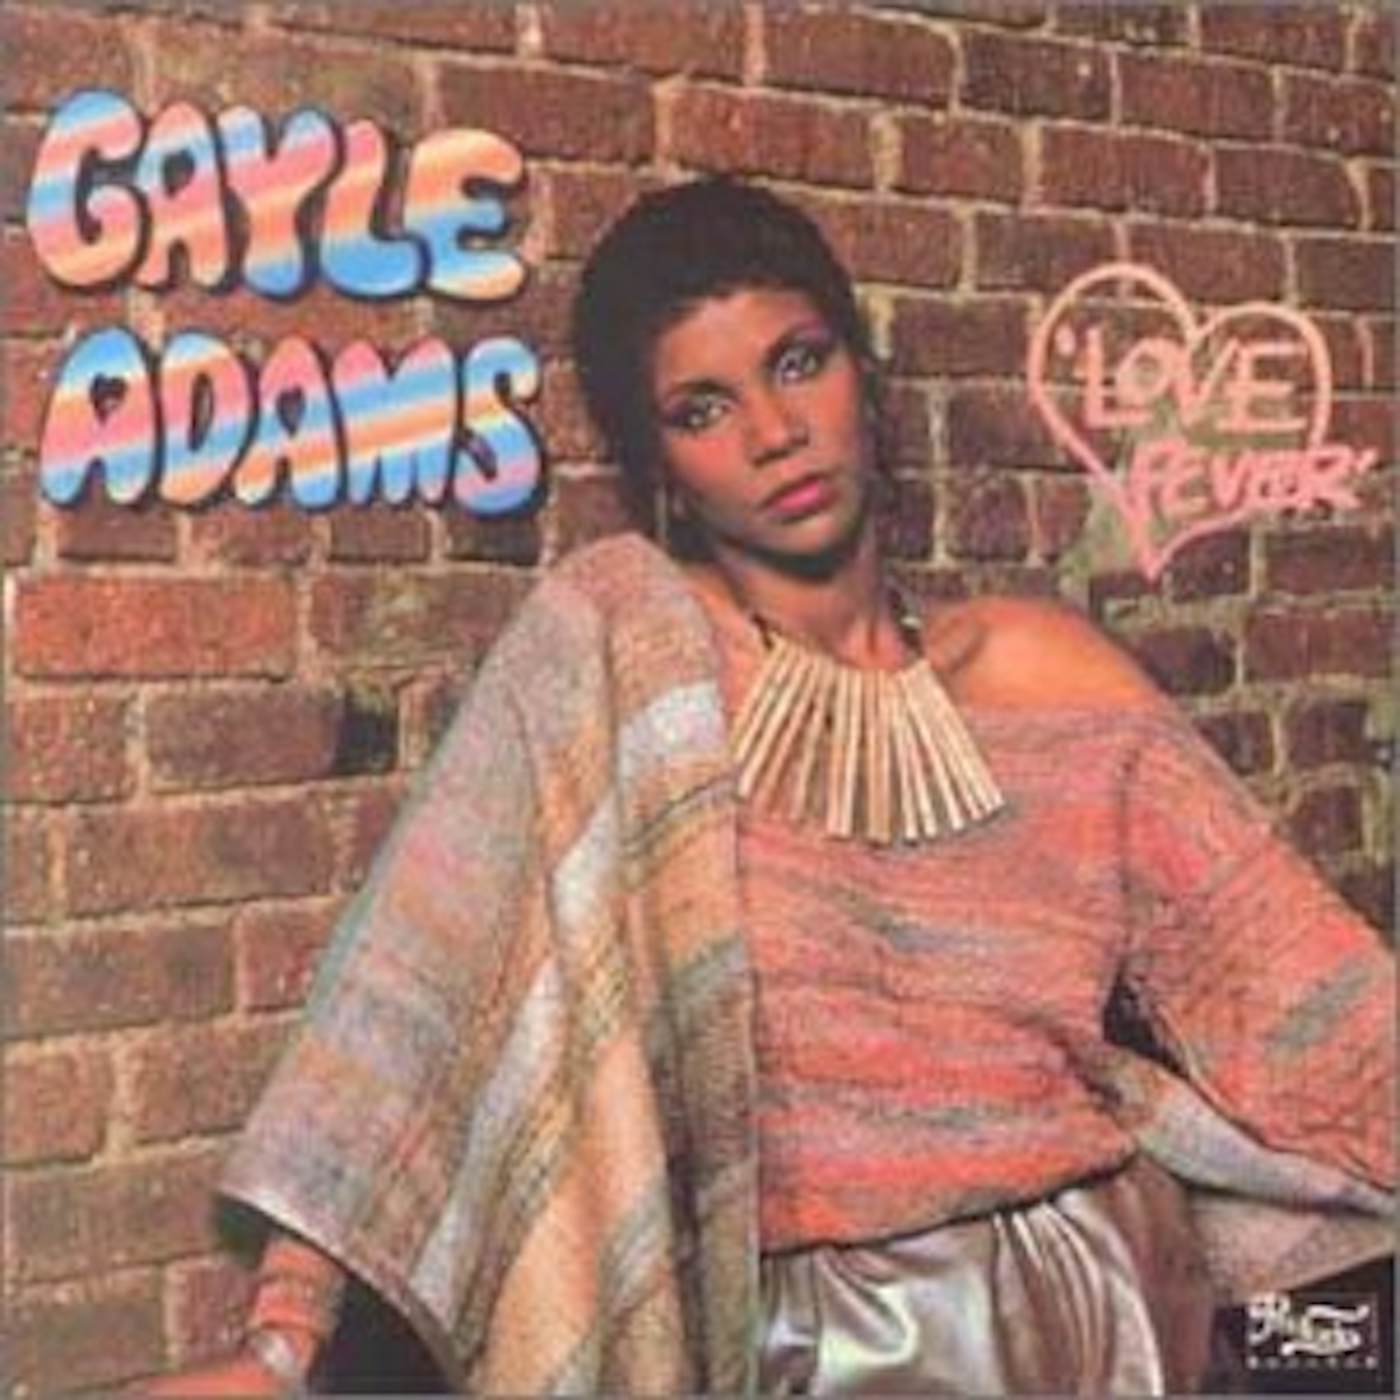 Gayle Adams LOVE FEVER CD